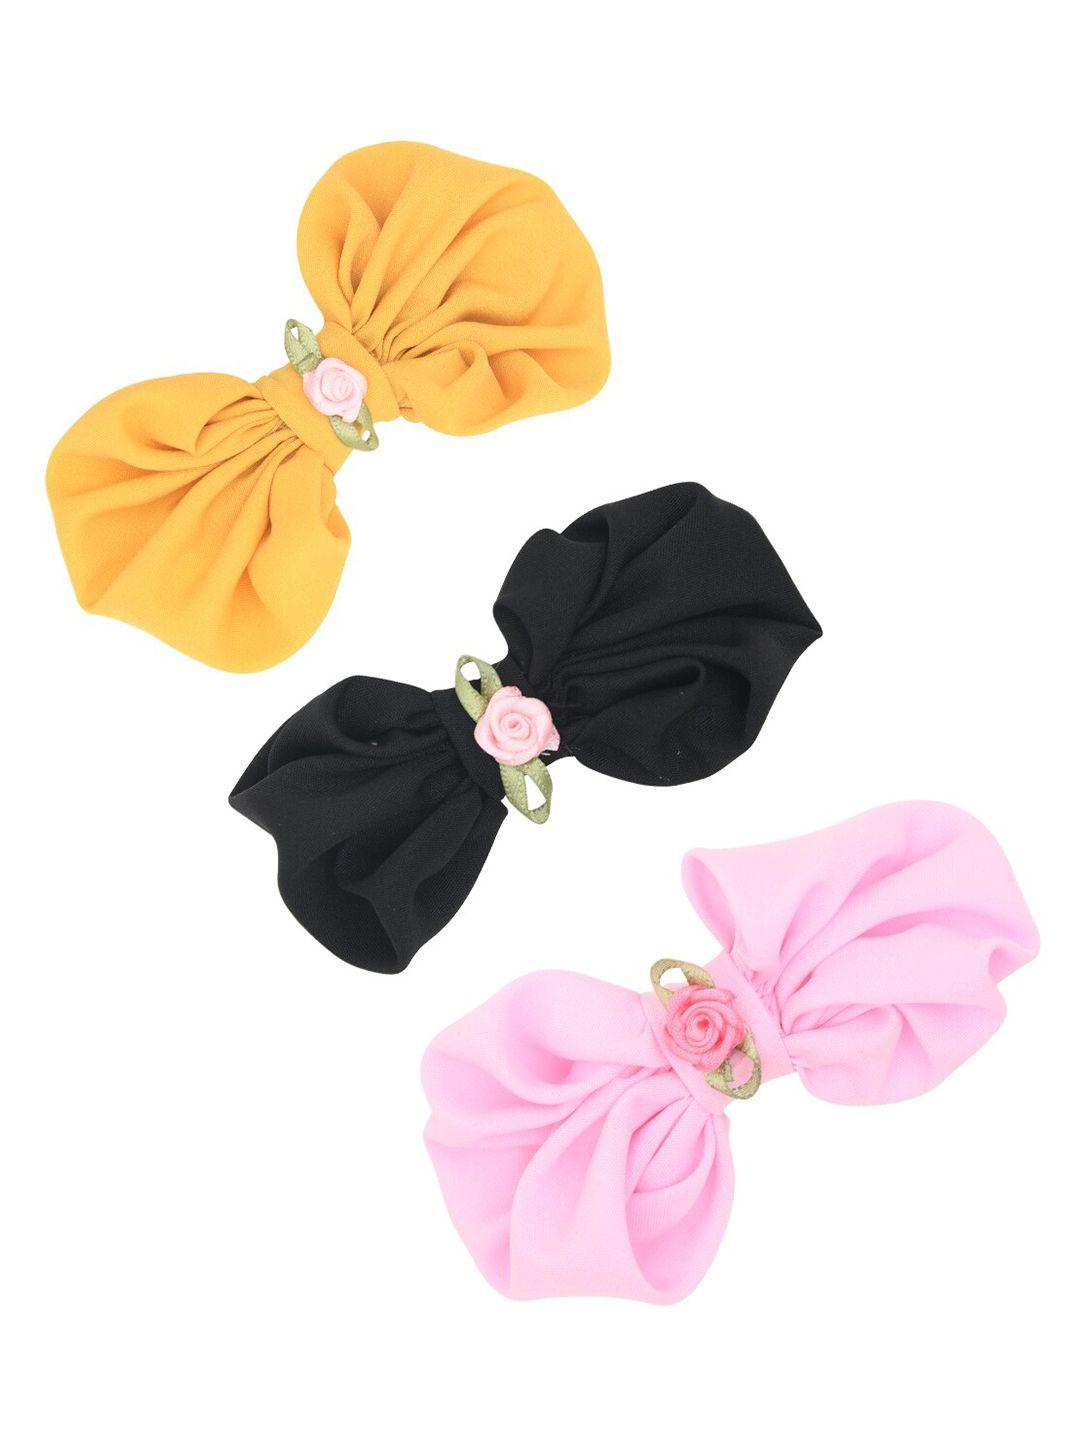 funkrafts-girls-black-&-yellow-set-of-3-hair-accessory-set